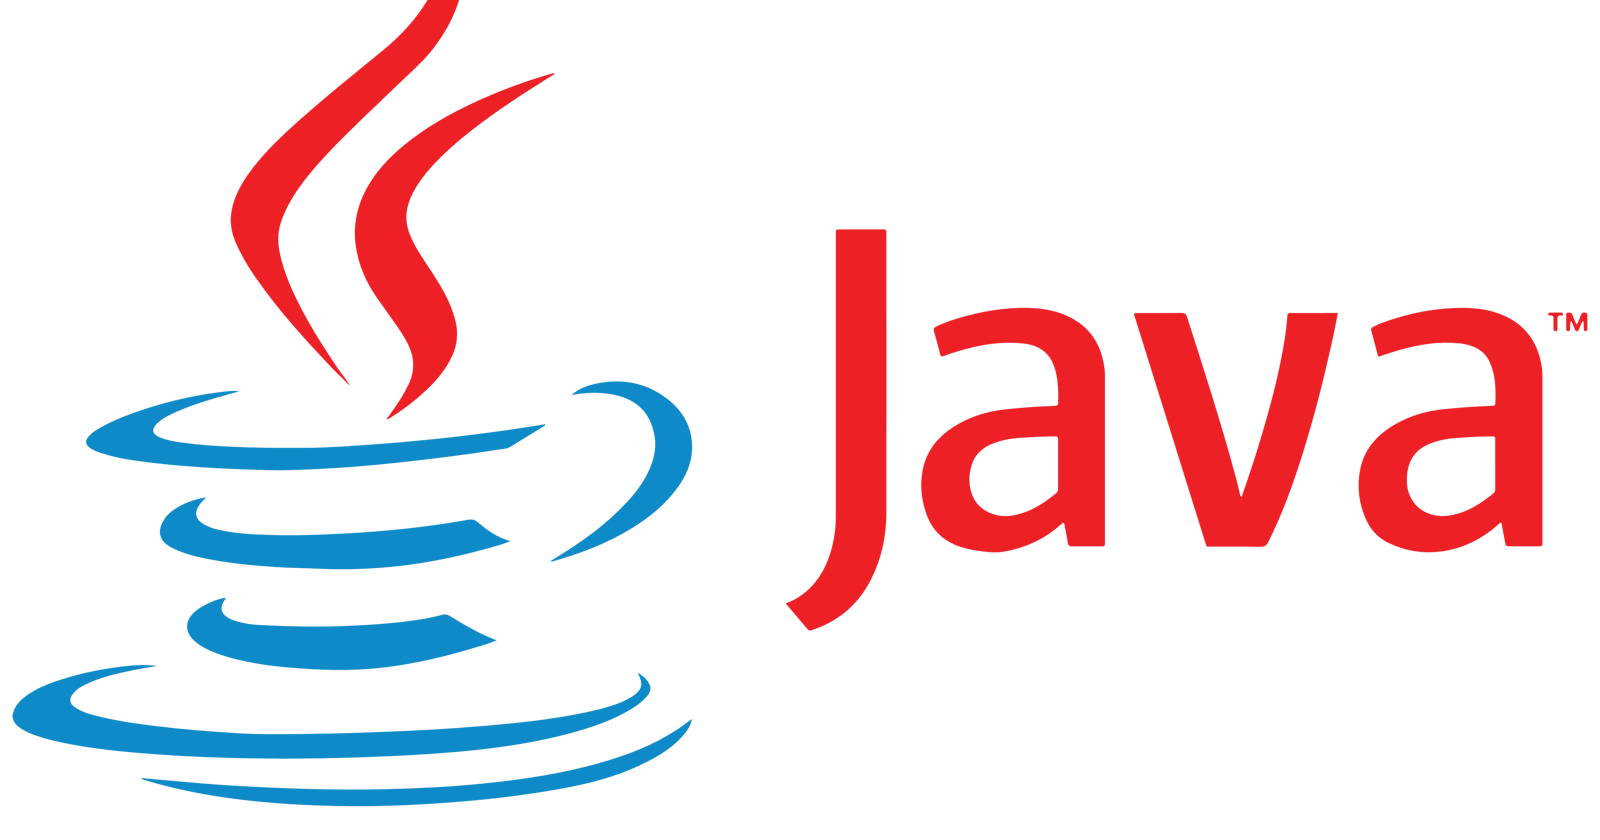 Set Interface in Java